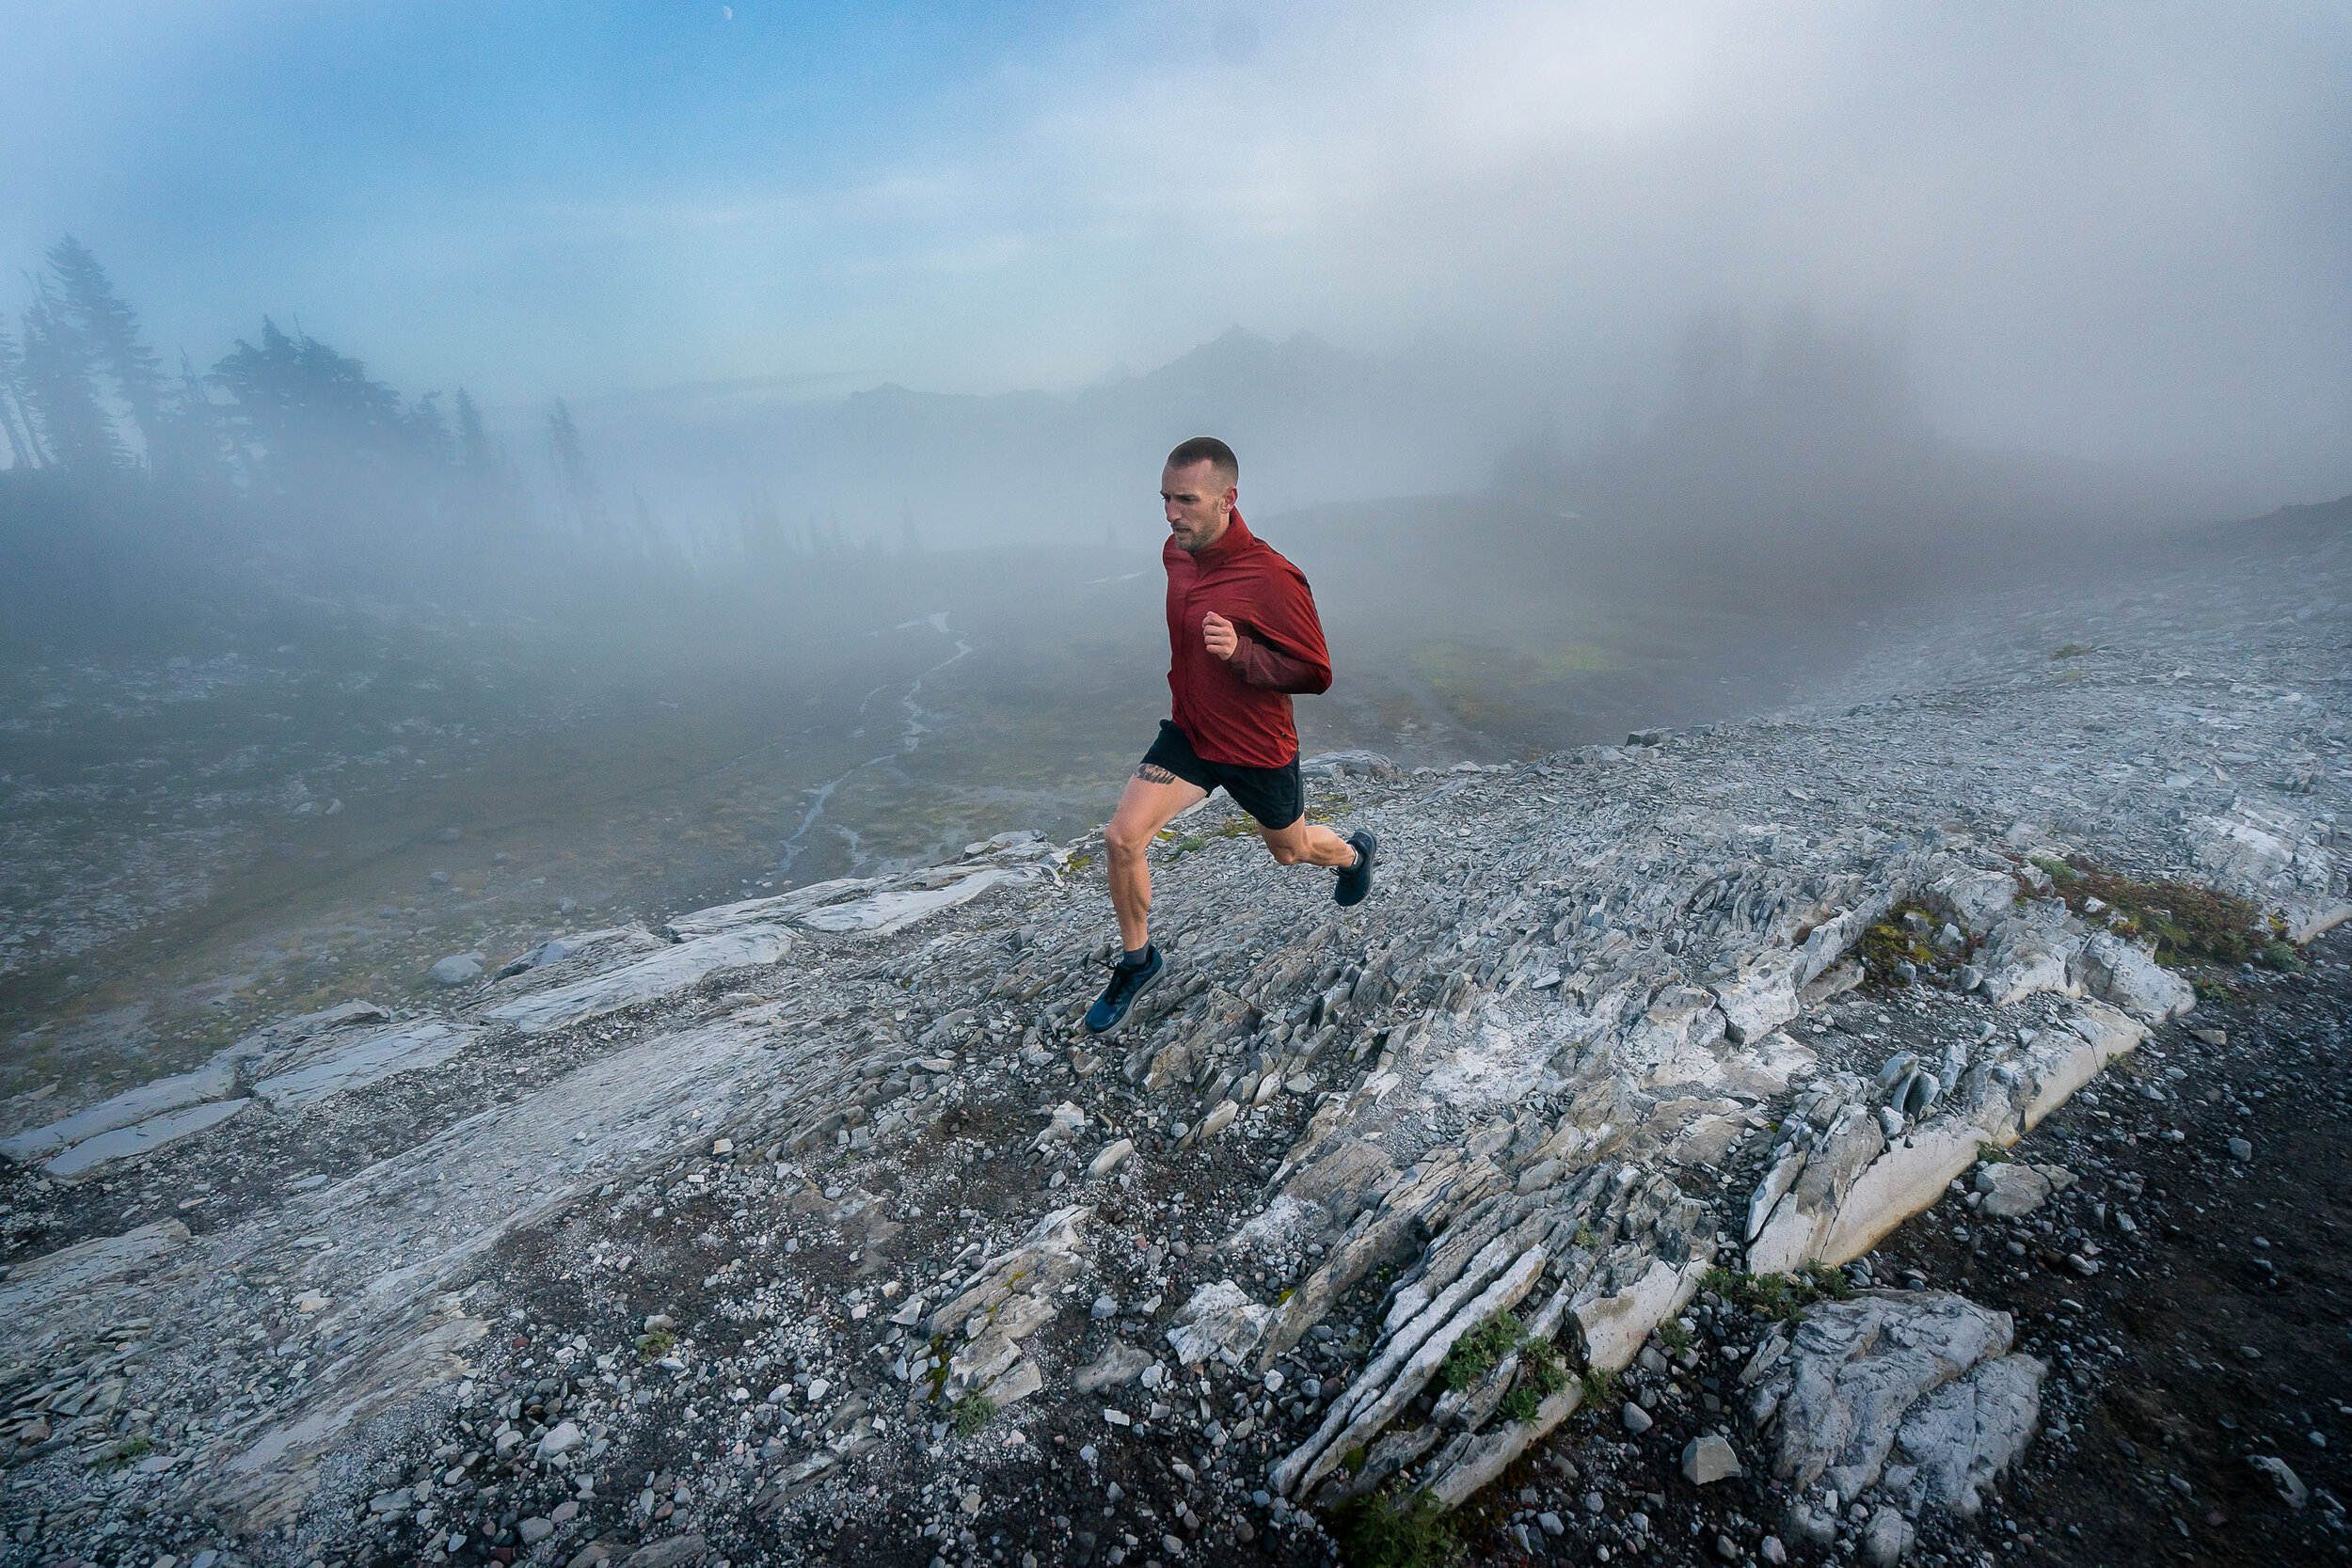  Adventure: Andrew O'Connor trail running in the alpine, Mt. Rainier National Park, Washington 